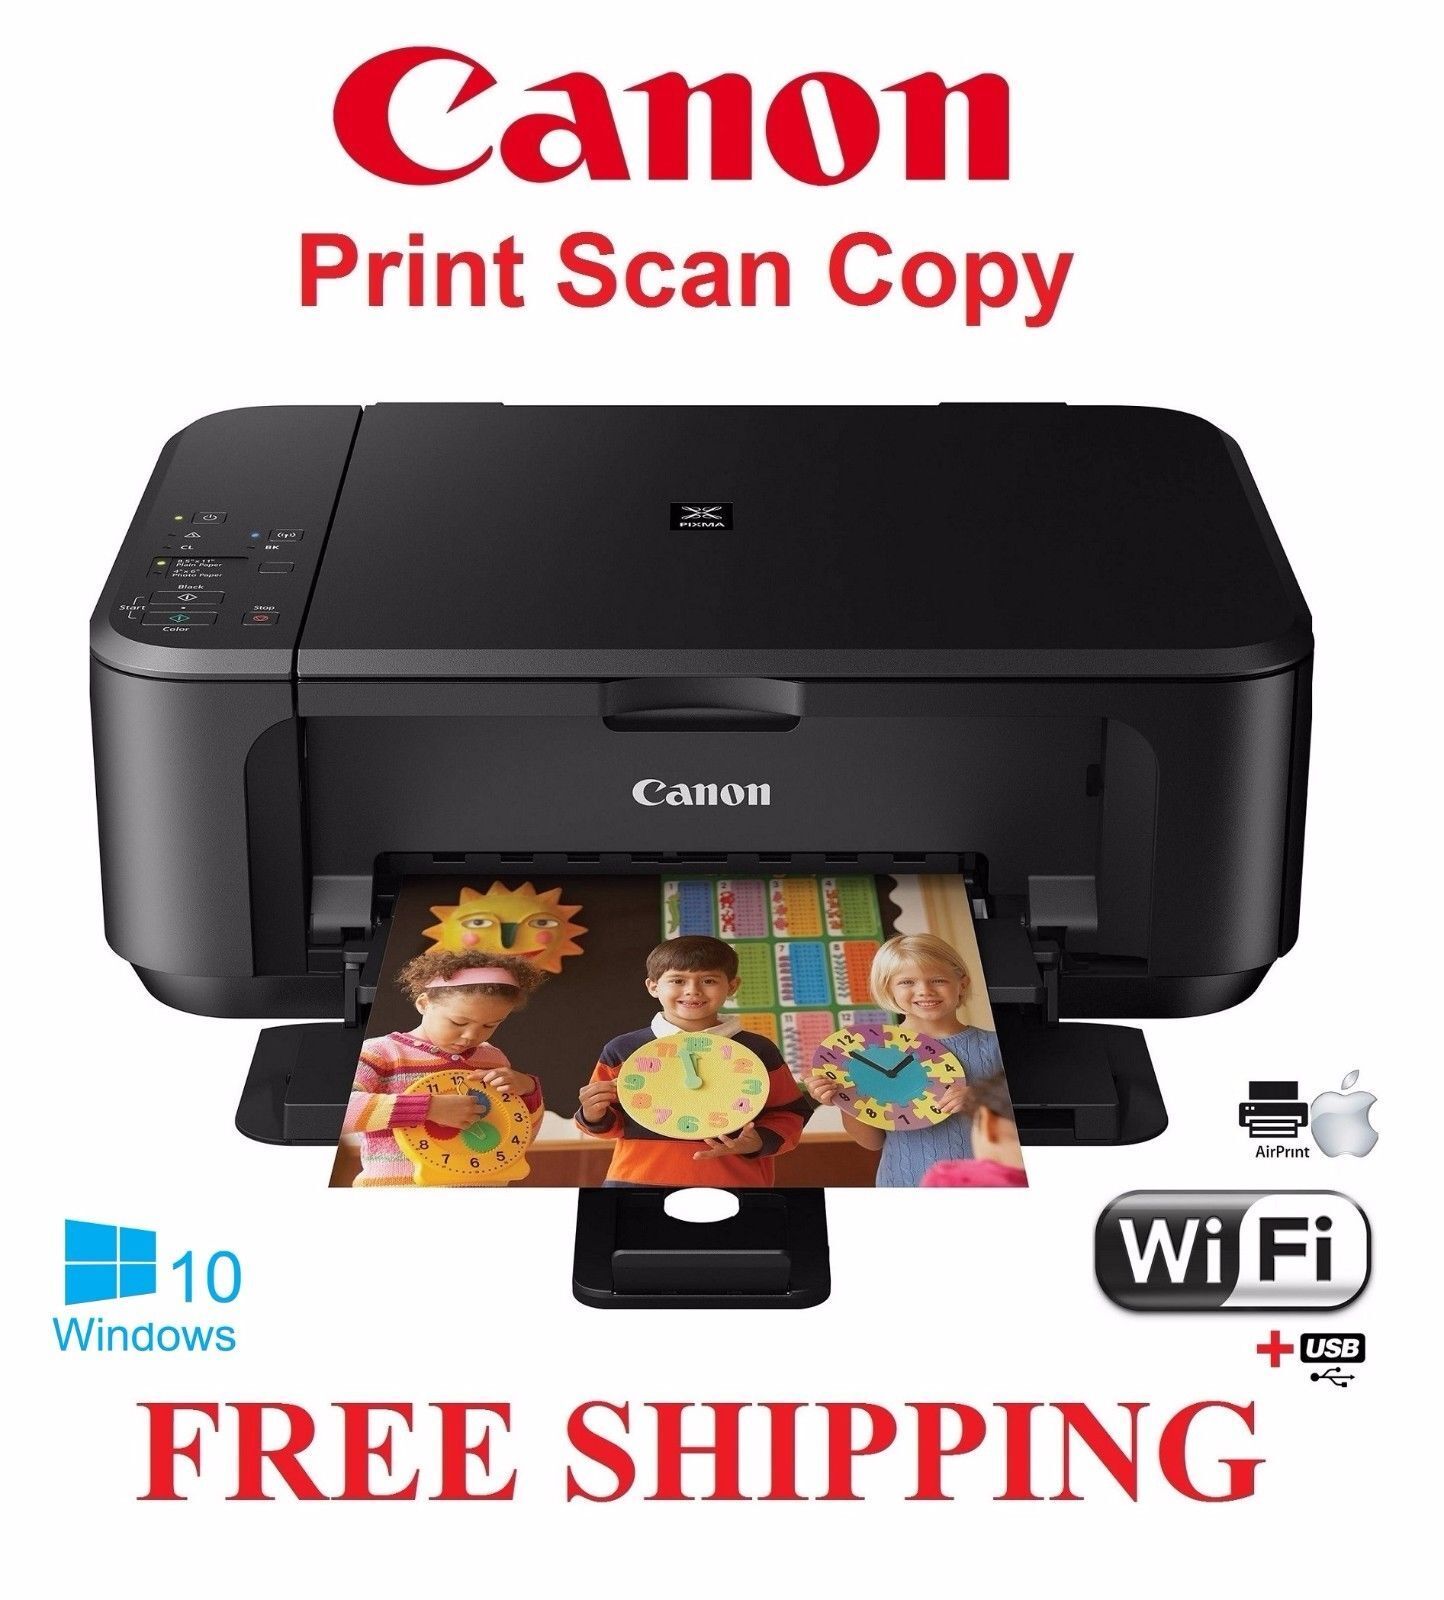 NEW Canon Pixma MG3620 (3320) Wireless Photo Printer/Copyer/Scan-Photo Print